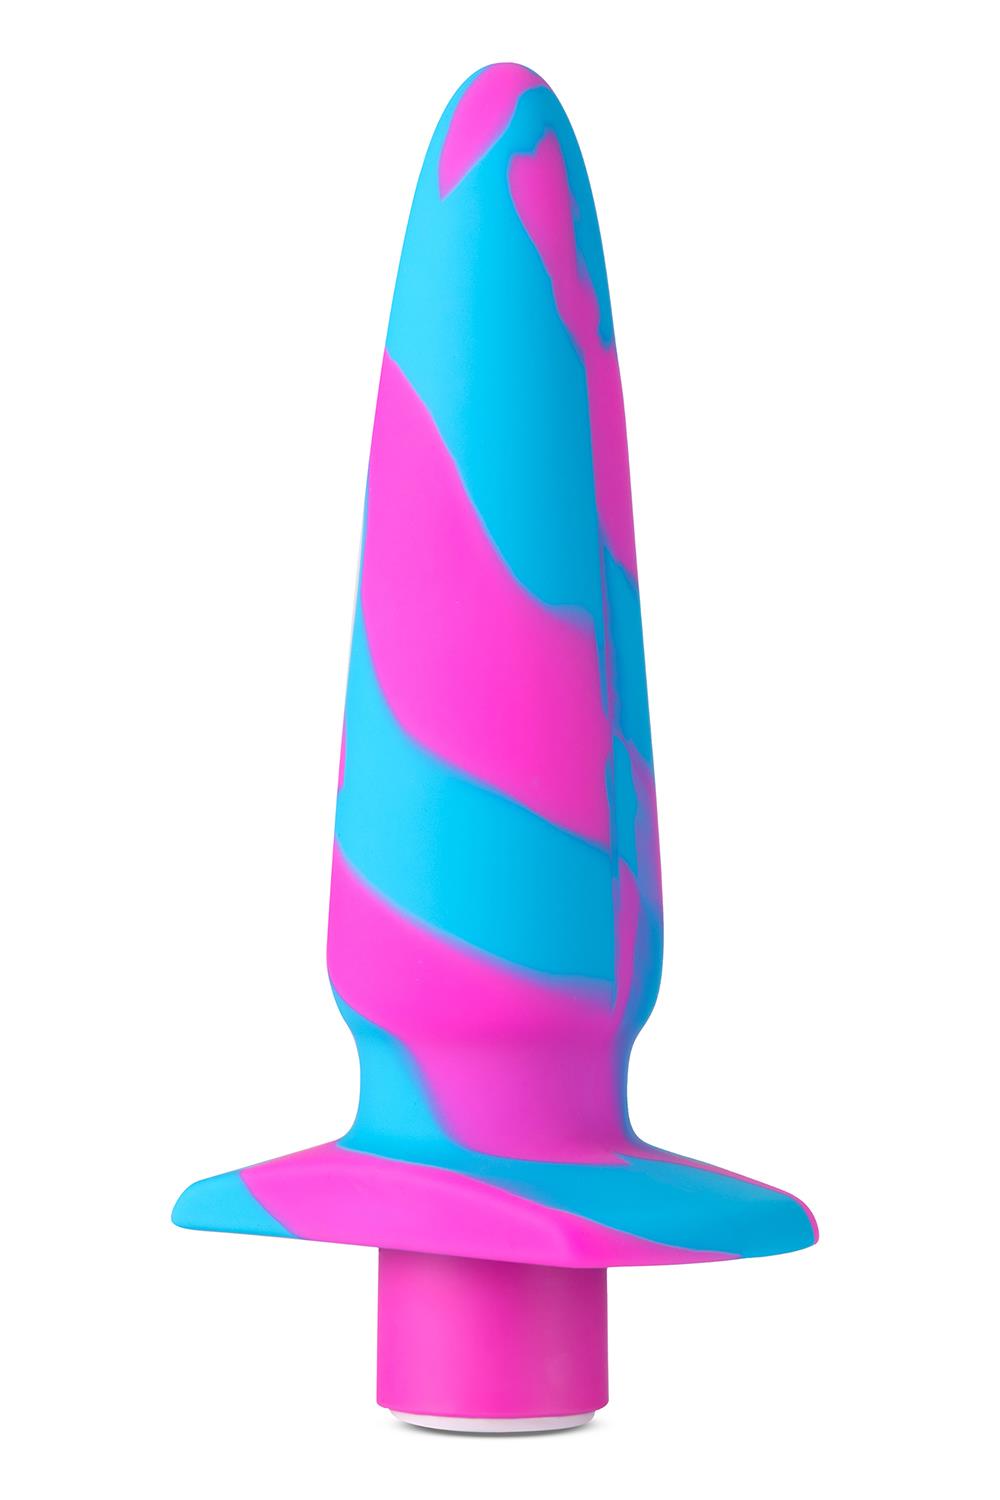 Plug anal con vibración Blush Avant rosa y azul, 12,7 x 3,1cm